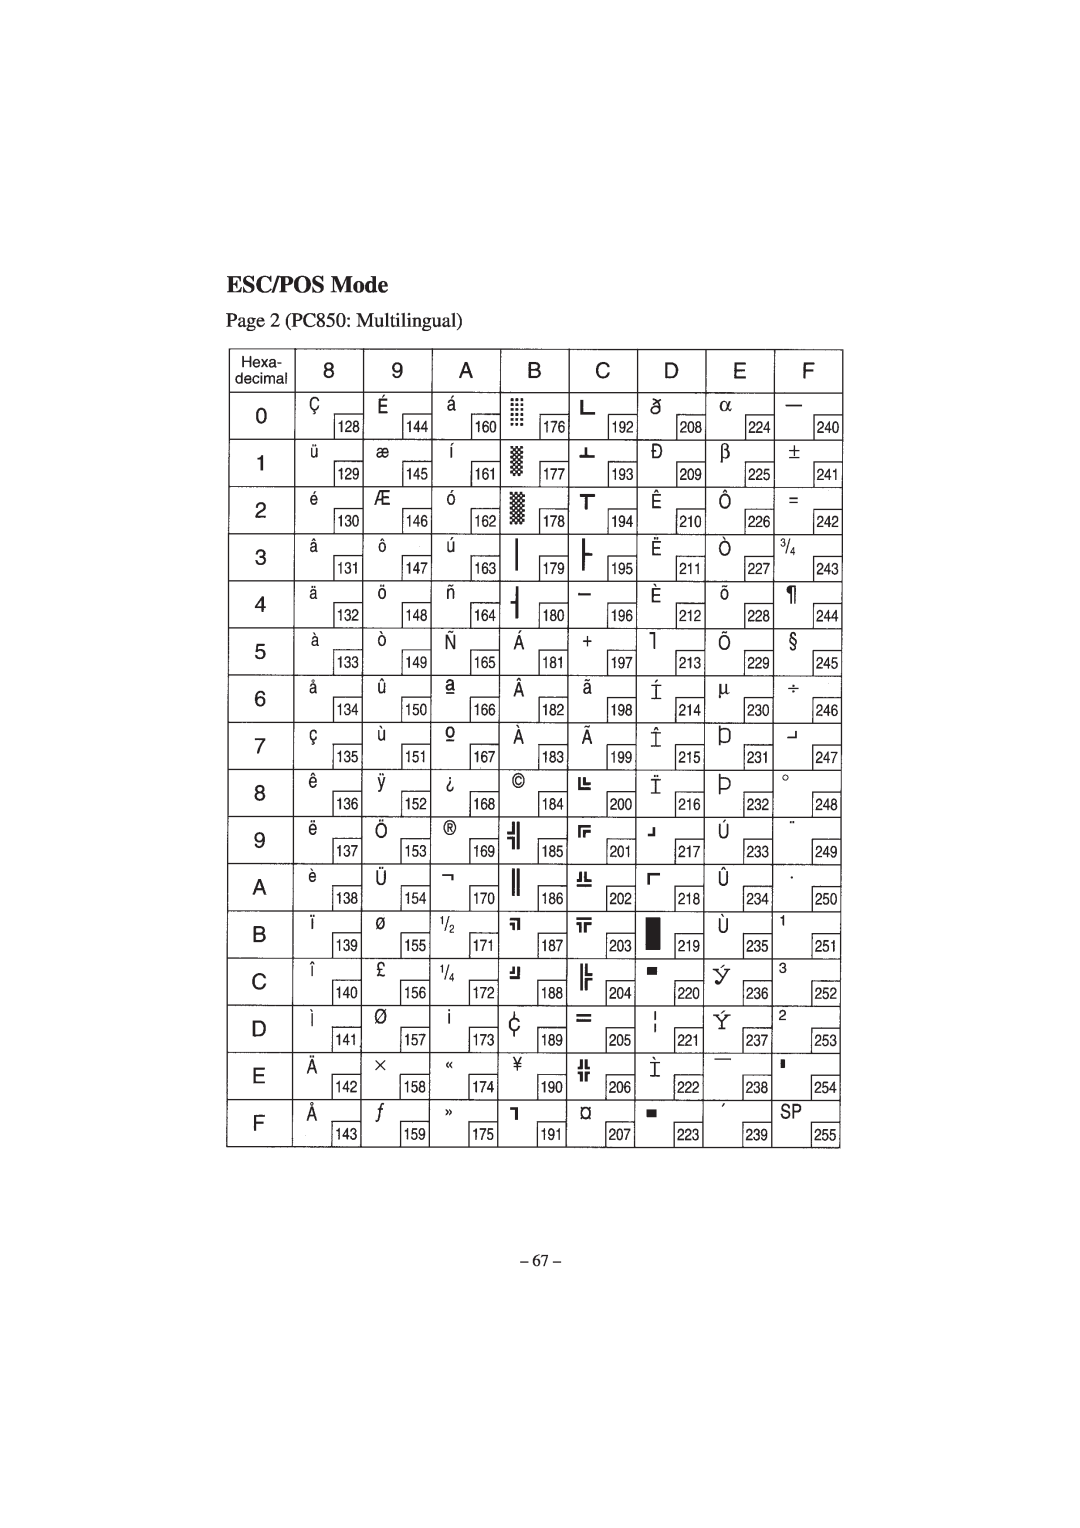 Star Micronics RS232 manual ESC/POS Mode, Page 2 PC850 Multilingual 